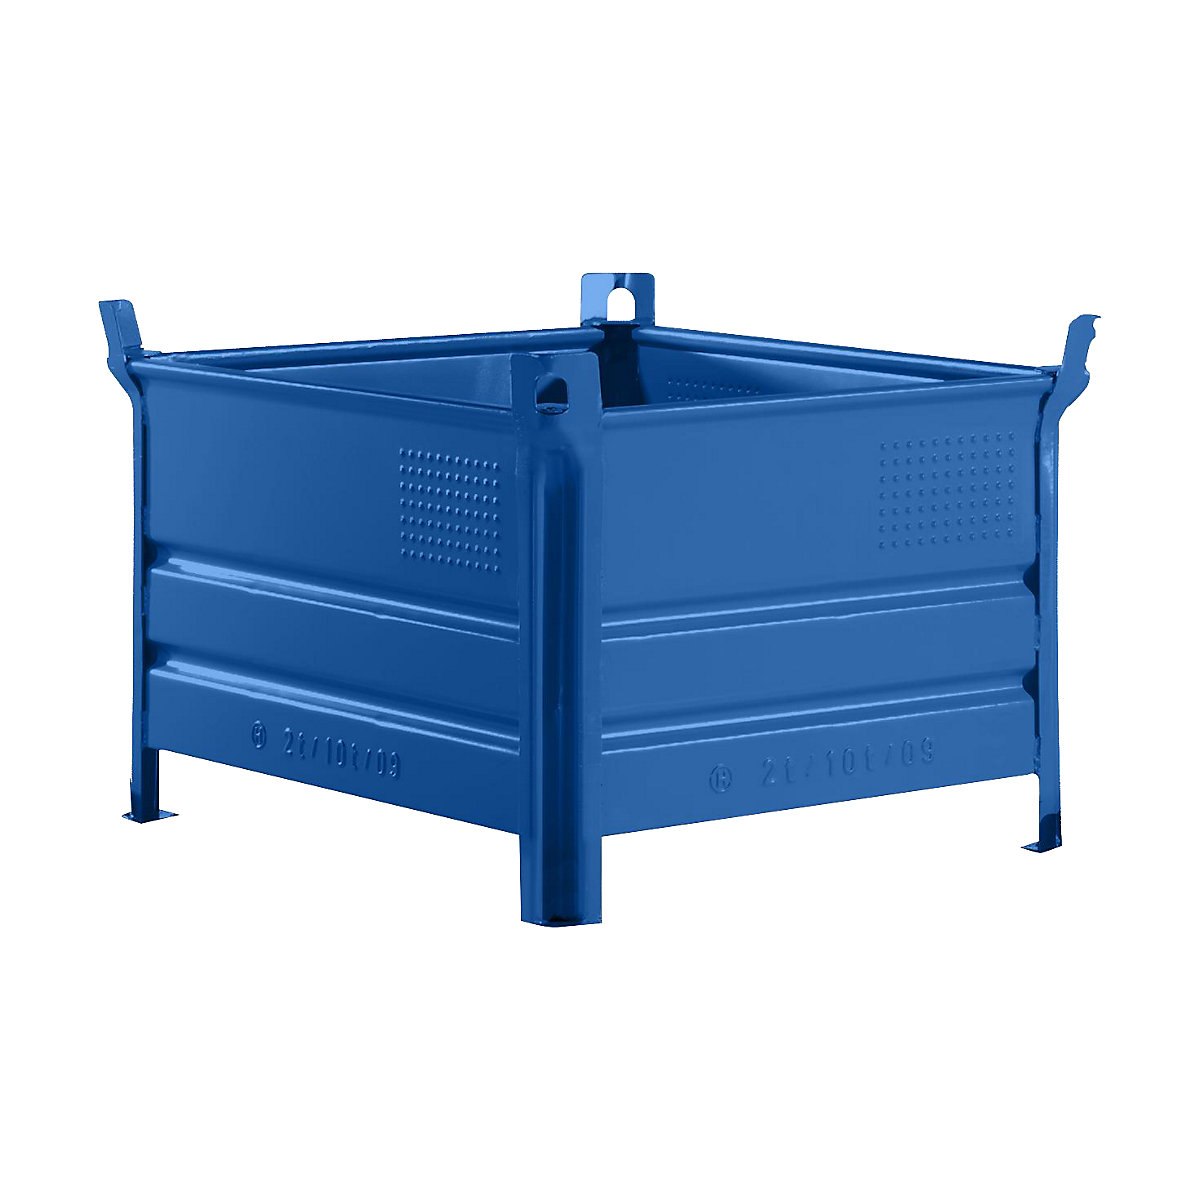 Vollwand-Stapelbehälter Heson, BxL 800 x 1000 mm, Traglast 500 kg, blau, ab 1 Stk-8